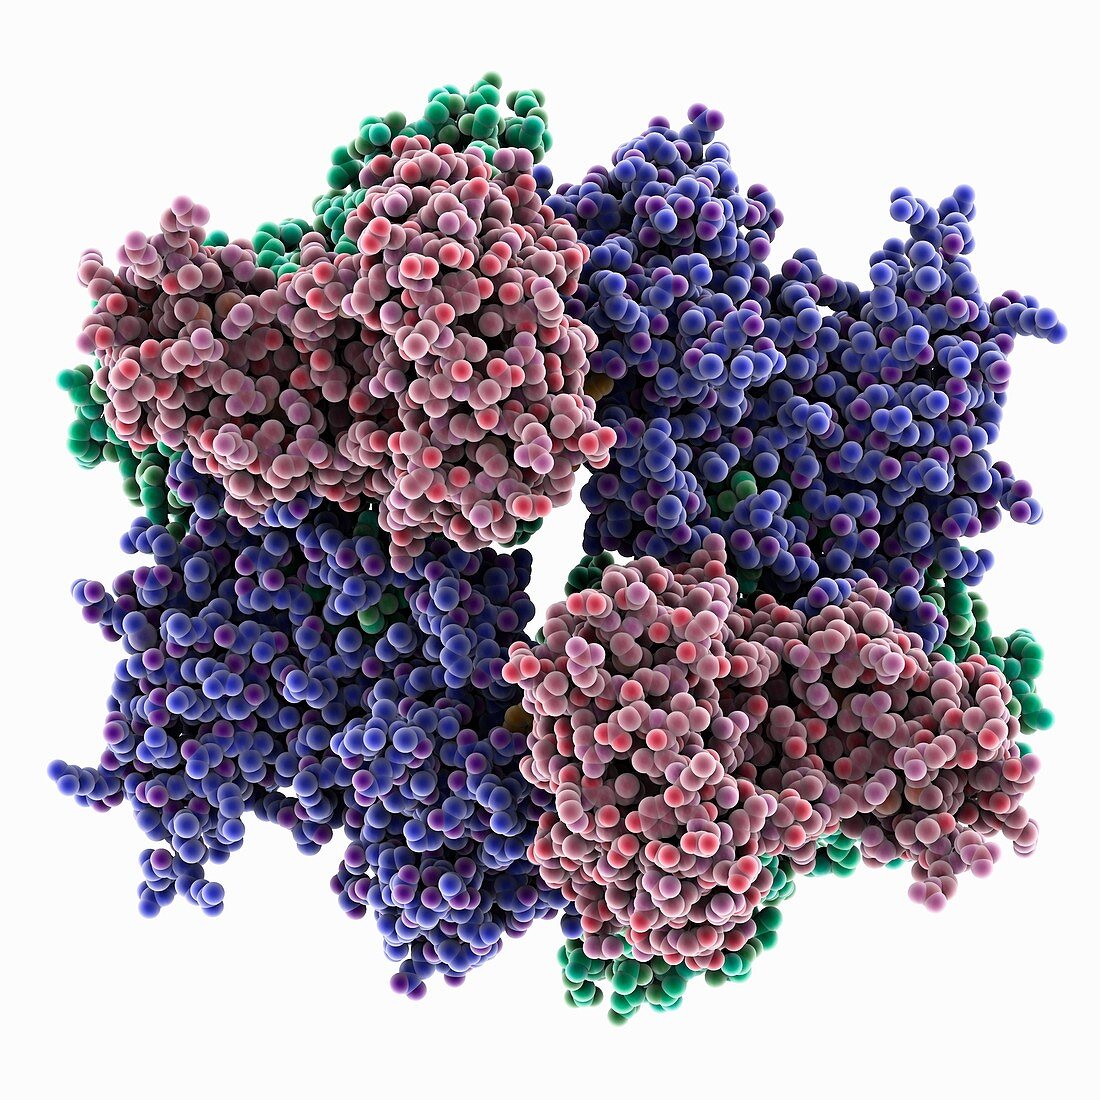 H1N1 influenza A virus nucleoprotein